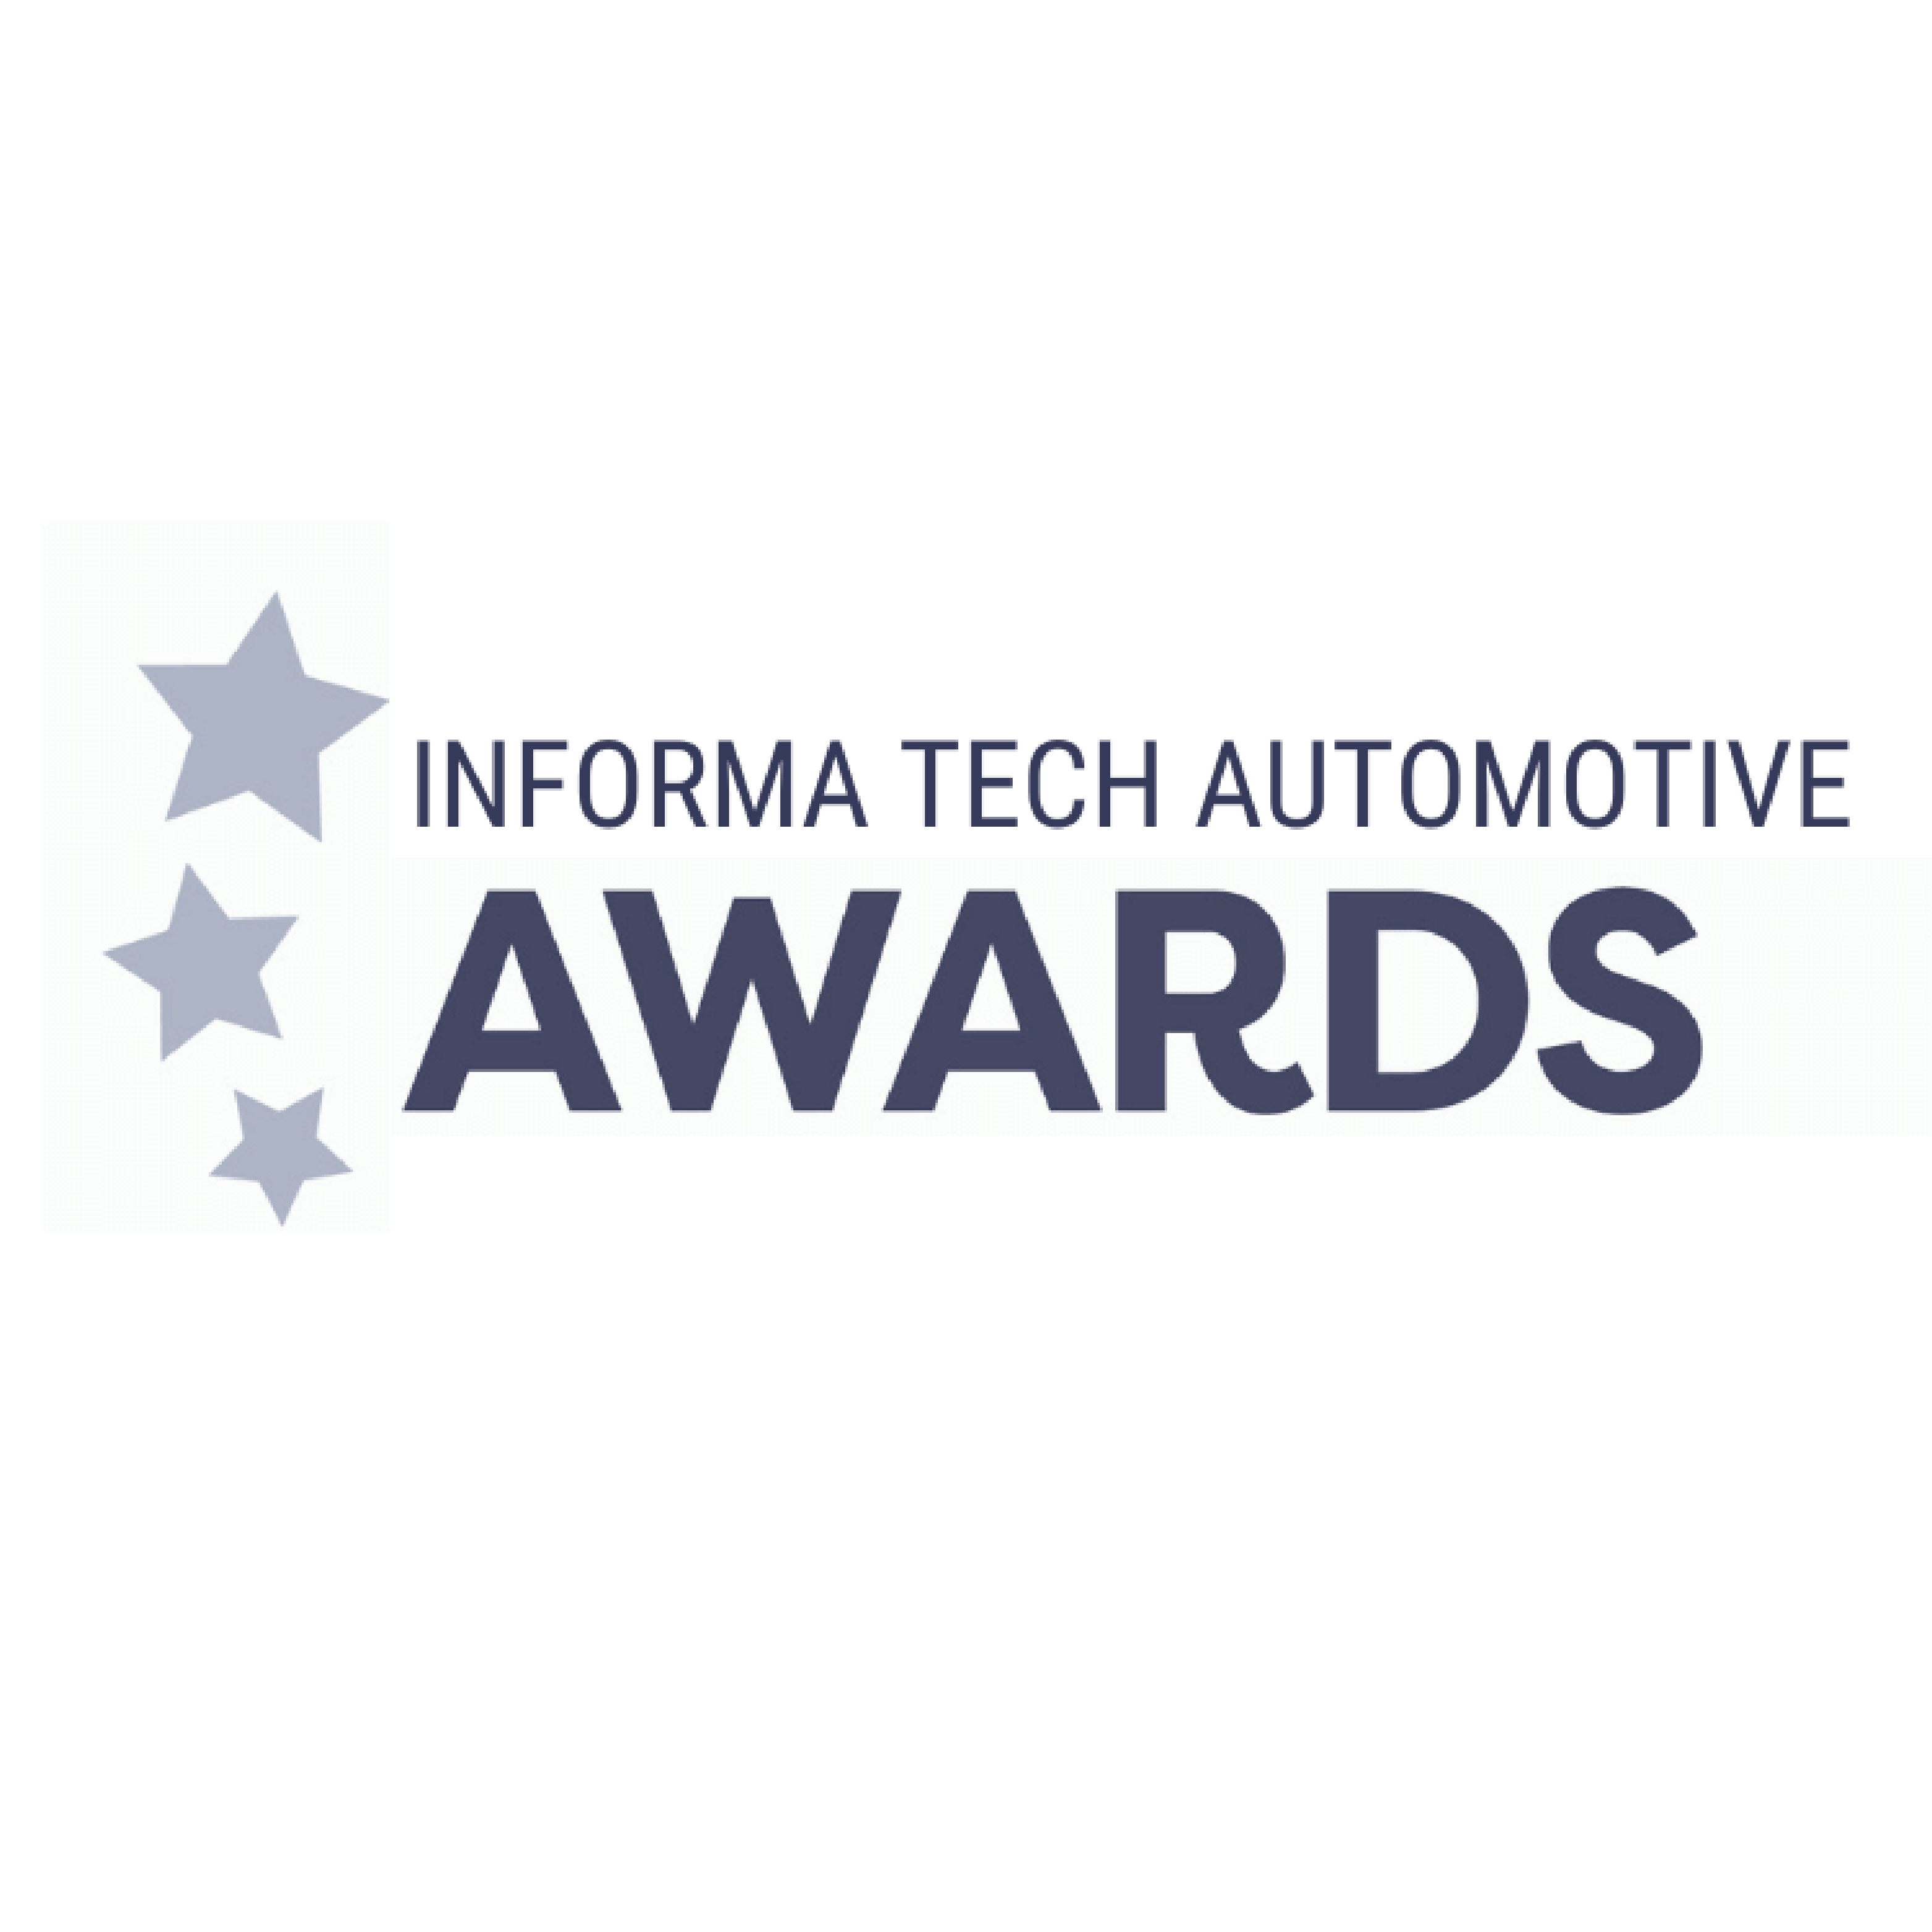 Informa Tech Automotive Awards - Color